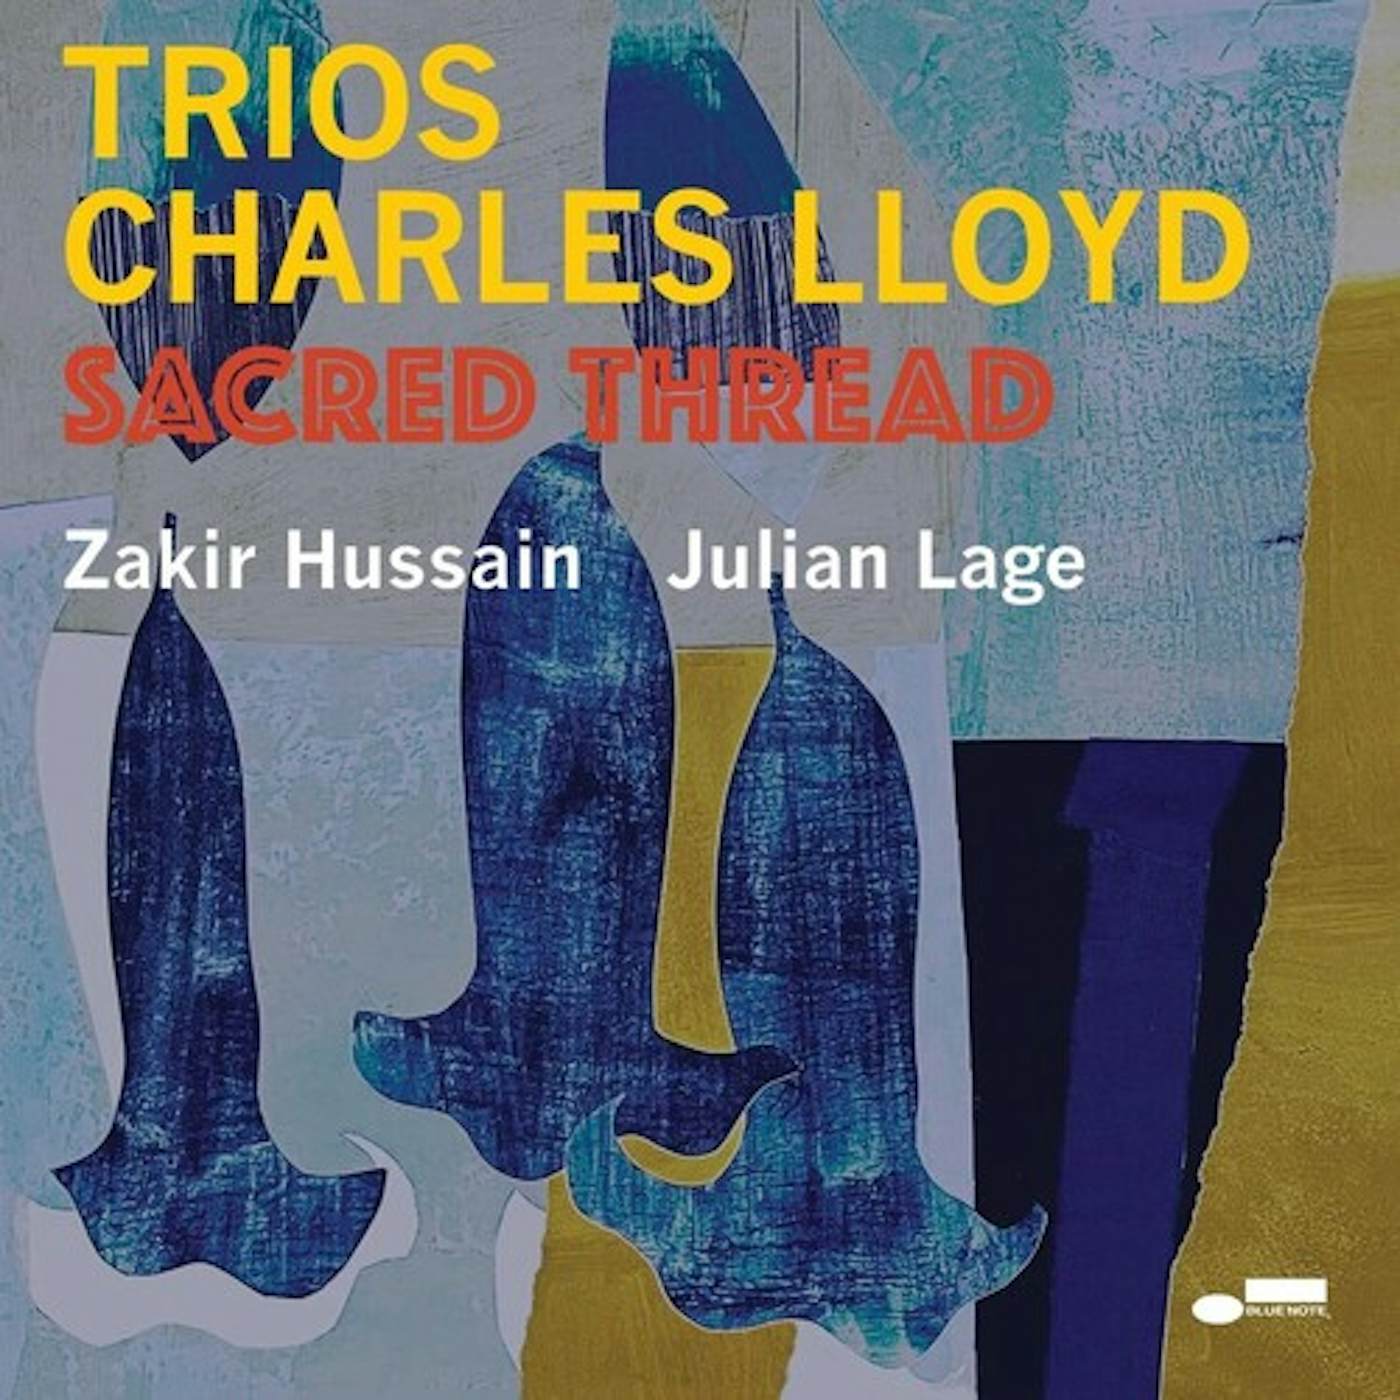 Charles Lloyd Trios: Sacred Thread Vinyl Record